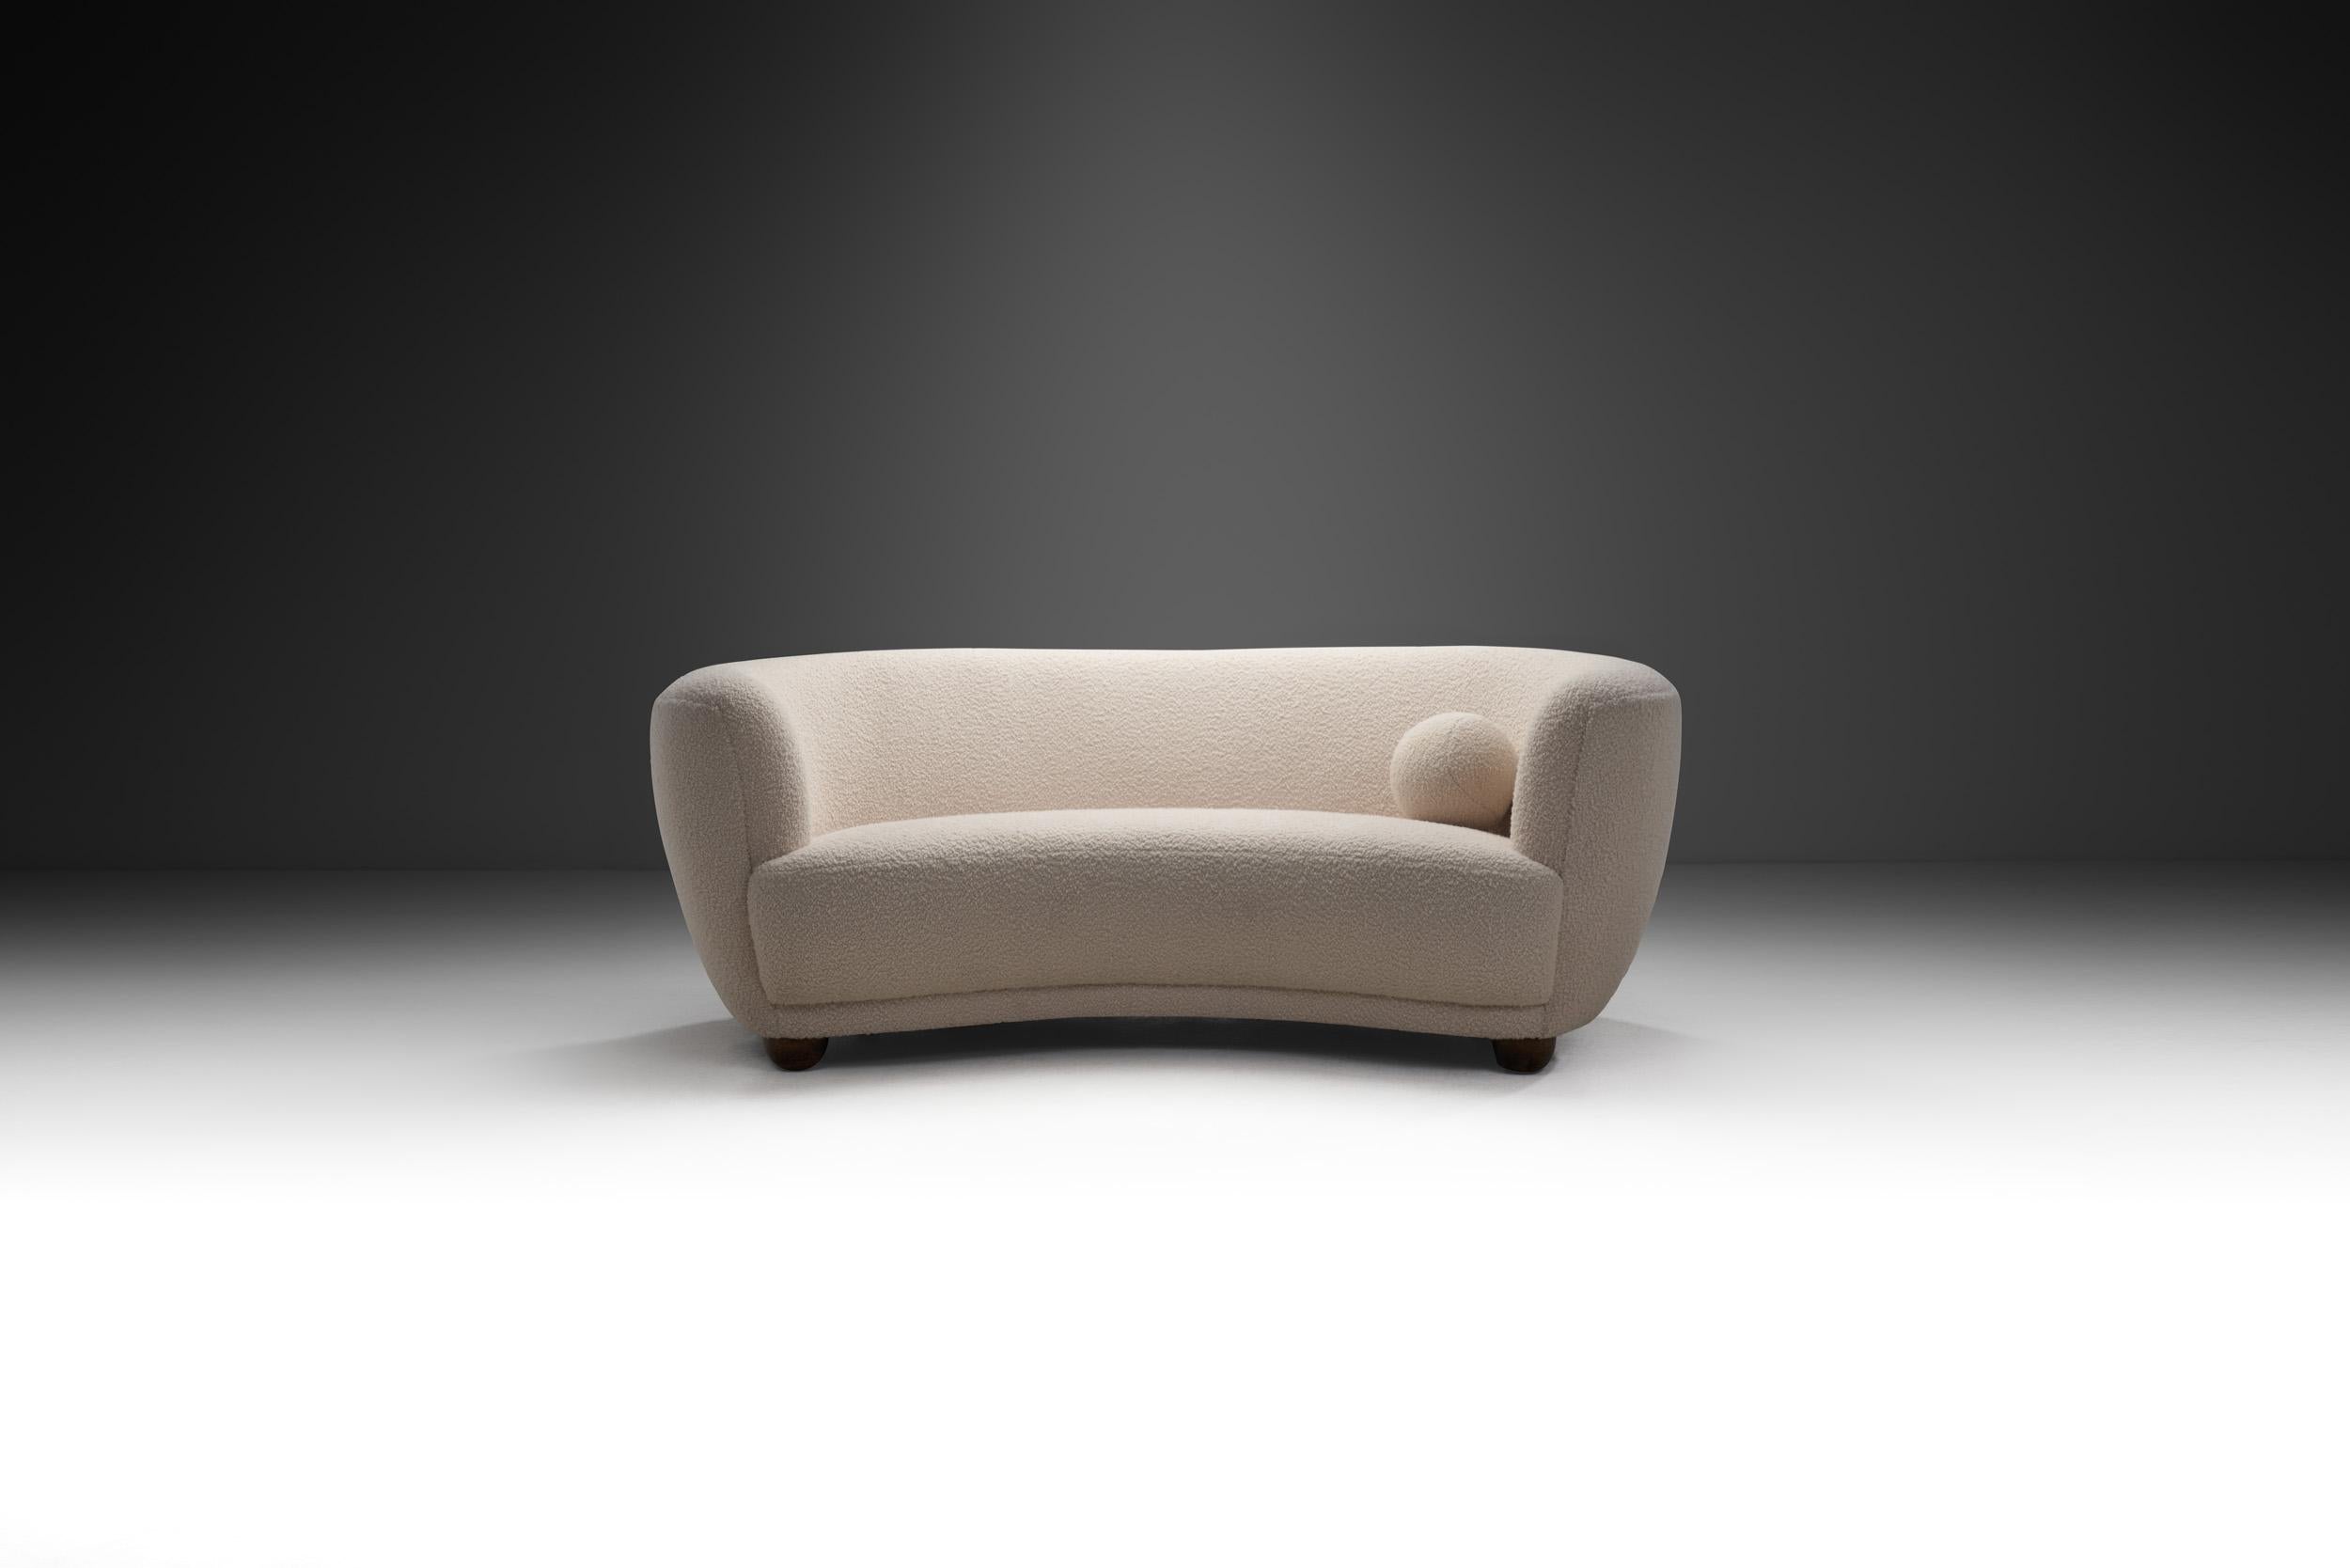 Scandinavian Modern Danish Modern Two-Seater Sofa with an Accent Pillow, Denmark ca 1940s For Sale